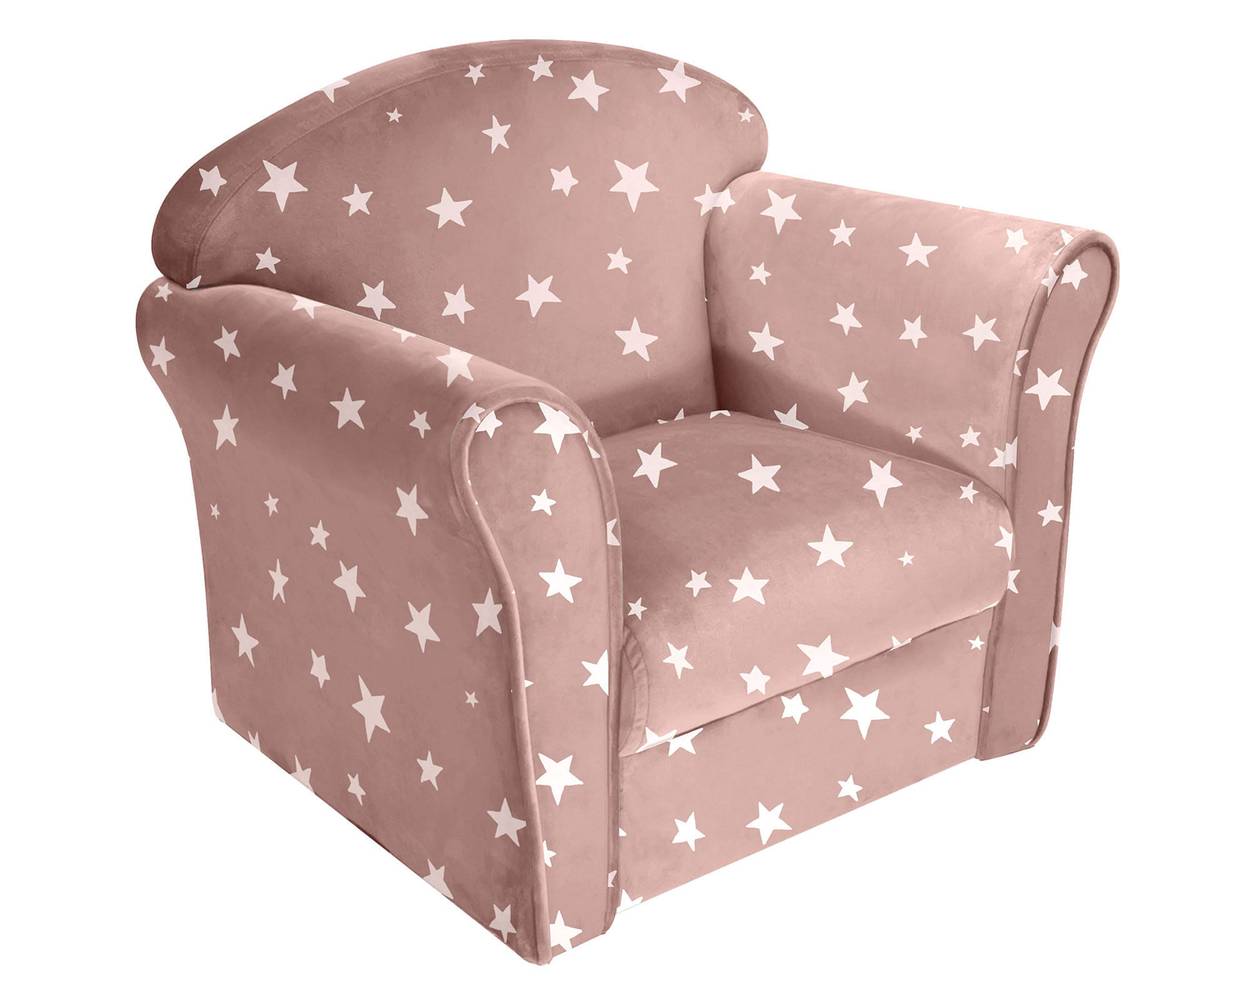 M+design sillón infantil estrellas rosa (50 x 40 x 44 cm)